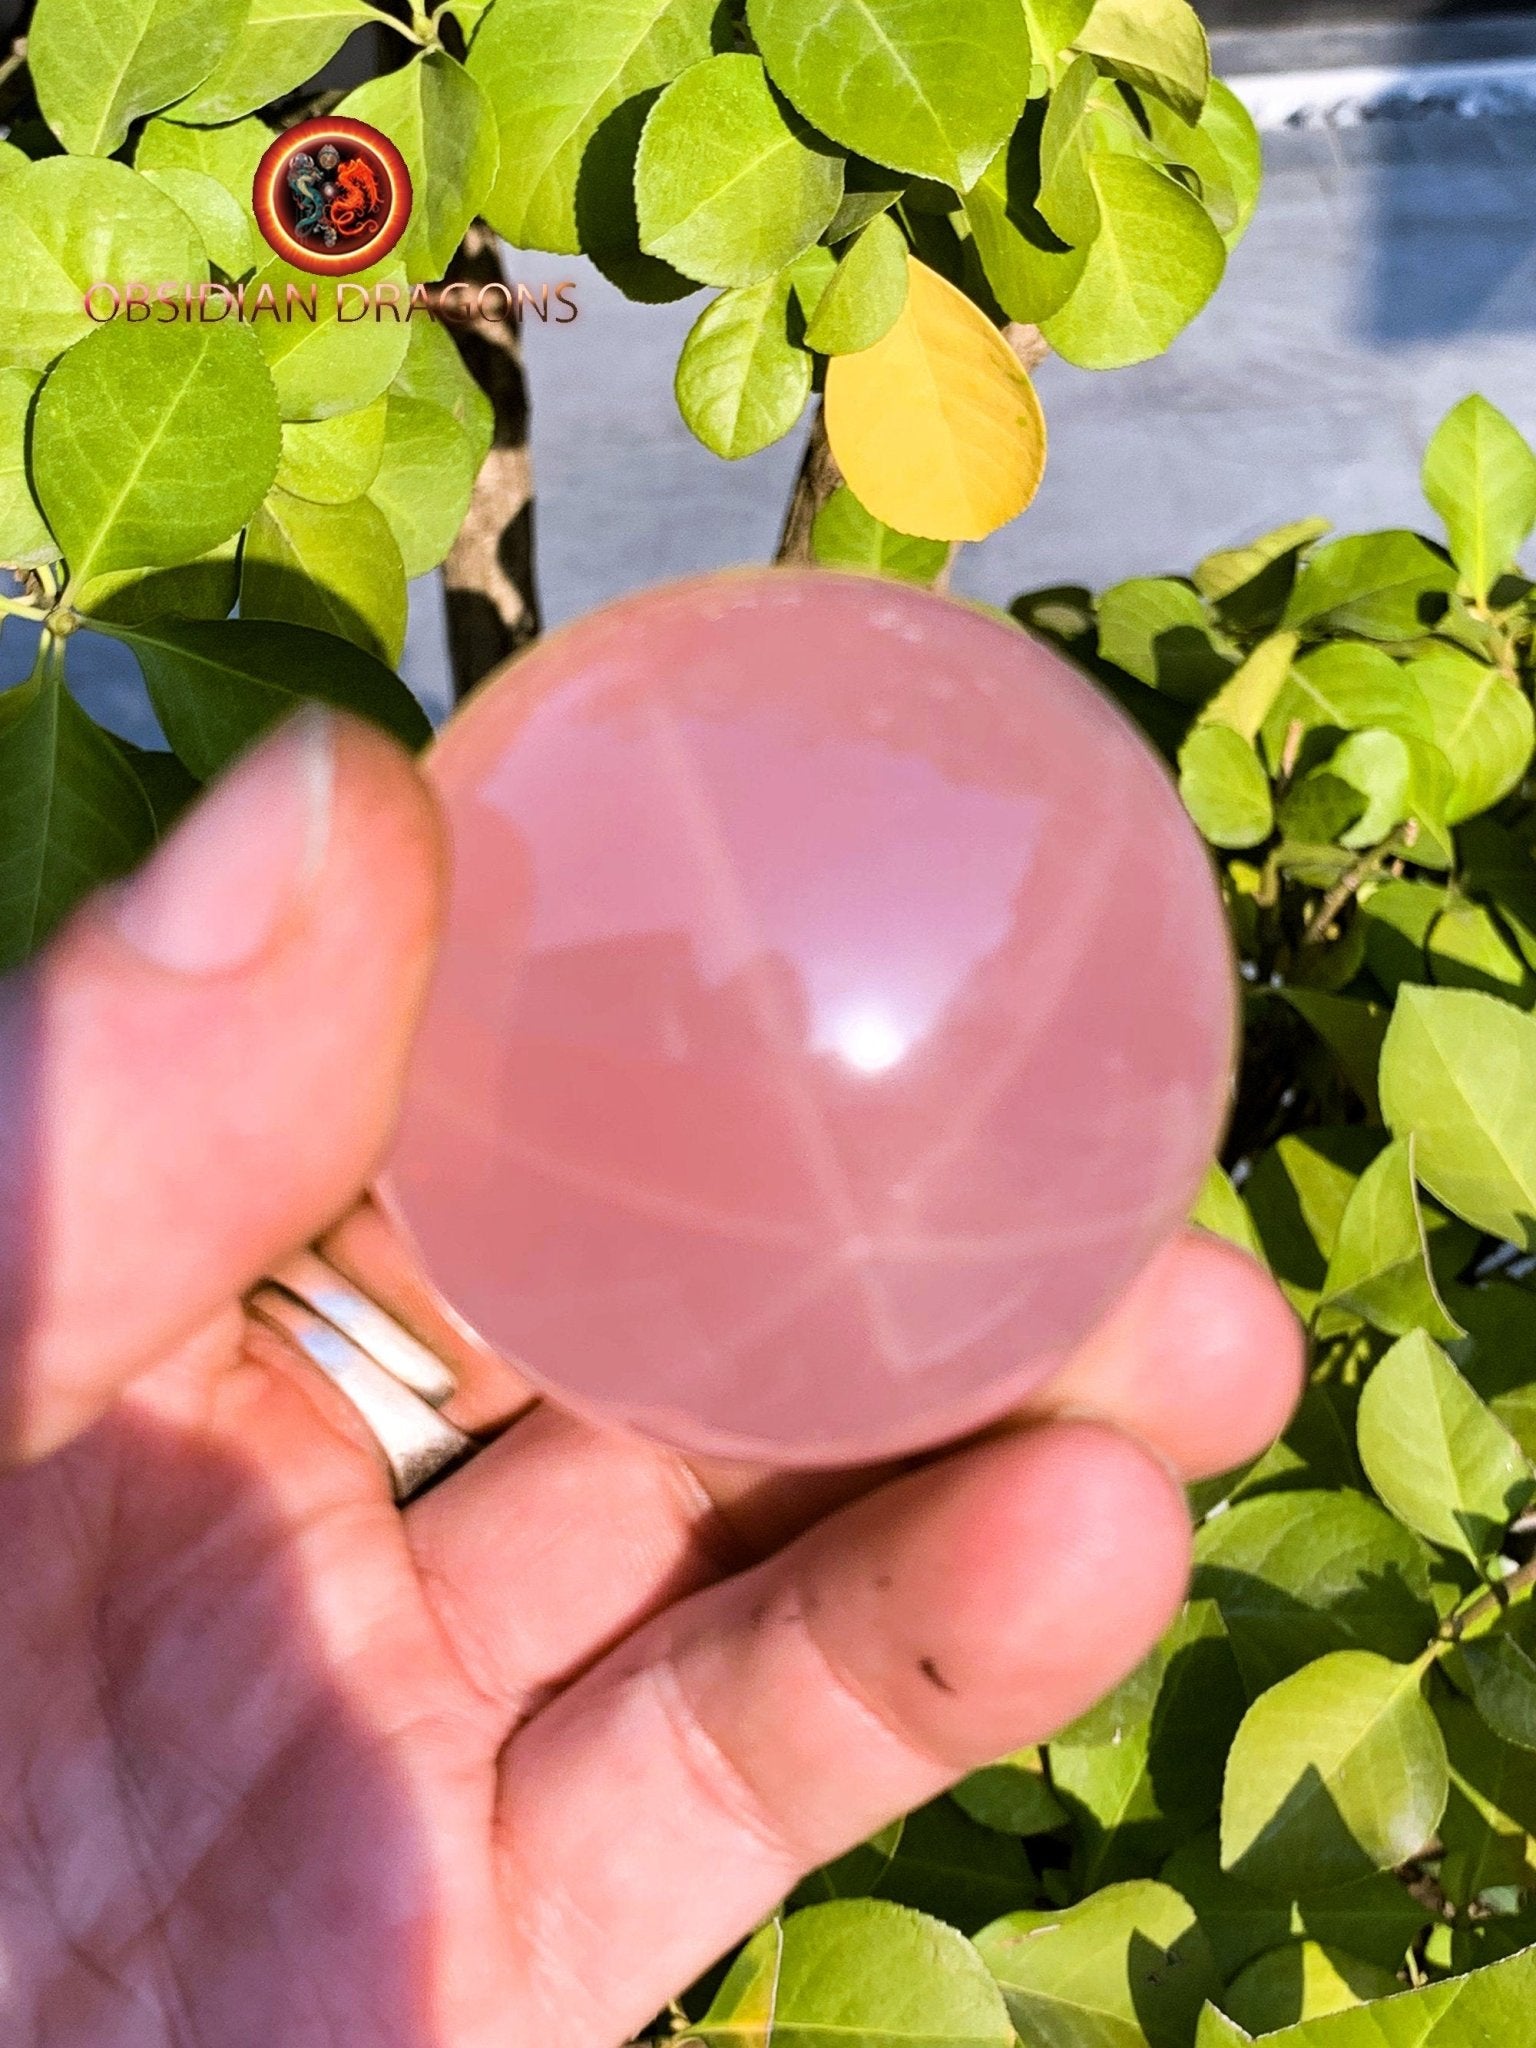 Sphère, quartz rose étoilé, quartz rose astérié ou quartz rose astérisé. Provenance du Mozambique. quartz rose naturel. 52mm de diamètre - obsidian dragon